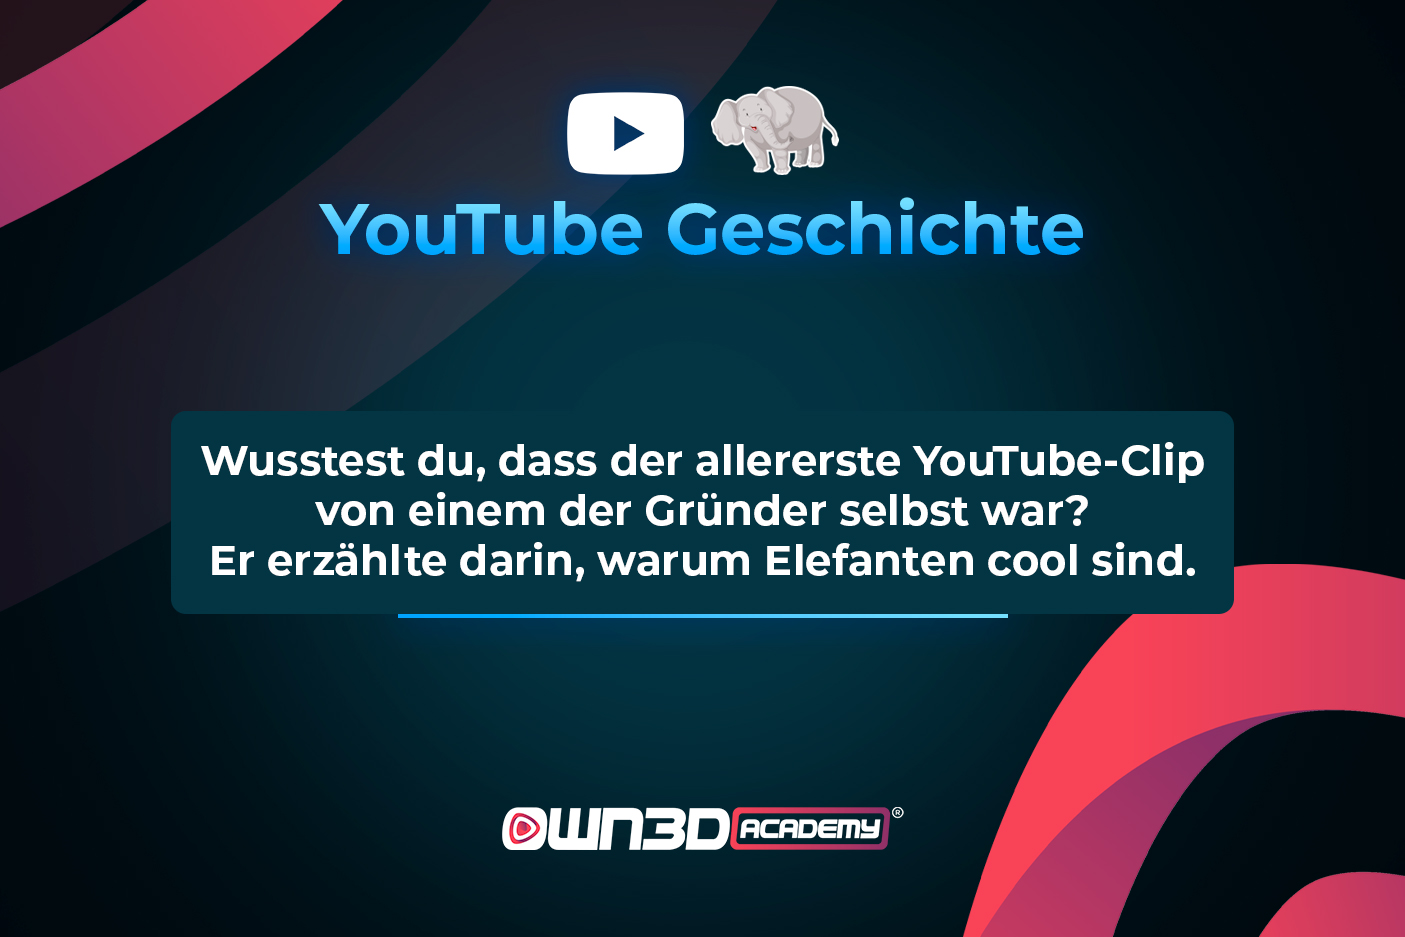 2 YouTube_What-is-youtube-GER- YouTube Geschichte.jpg